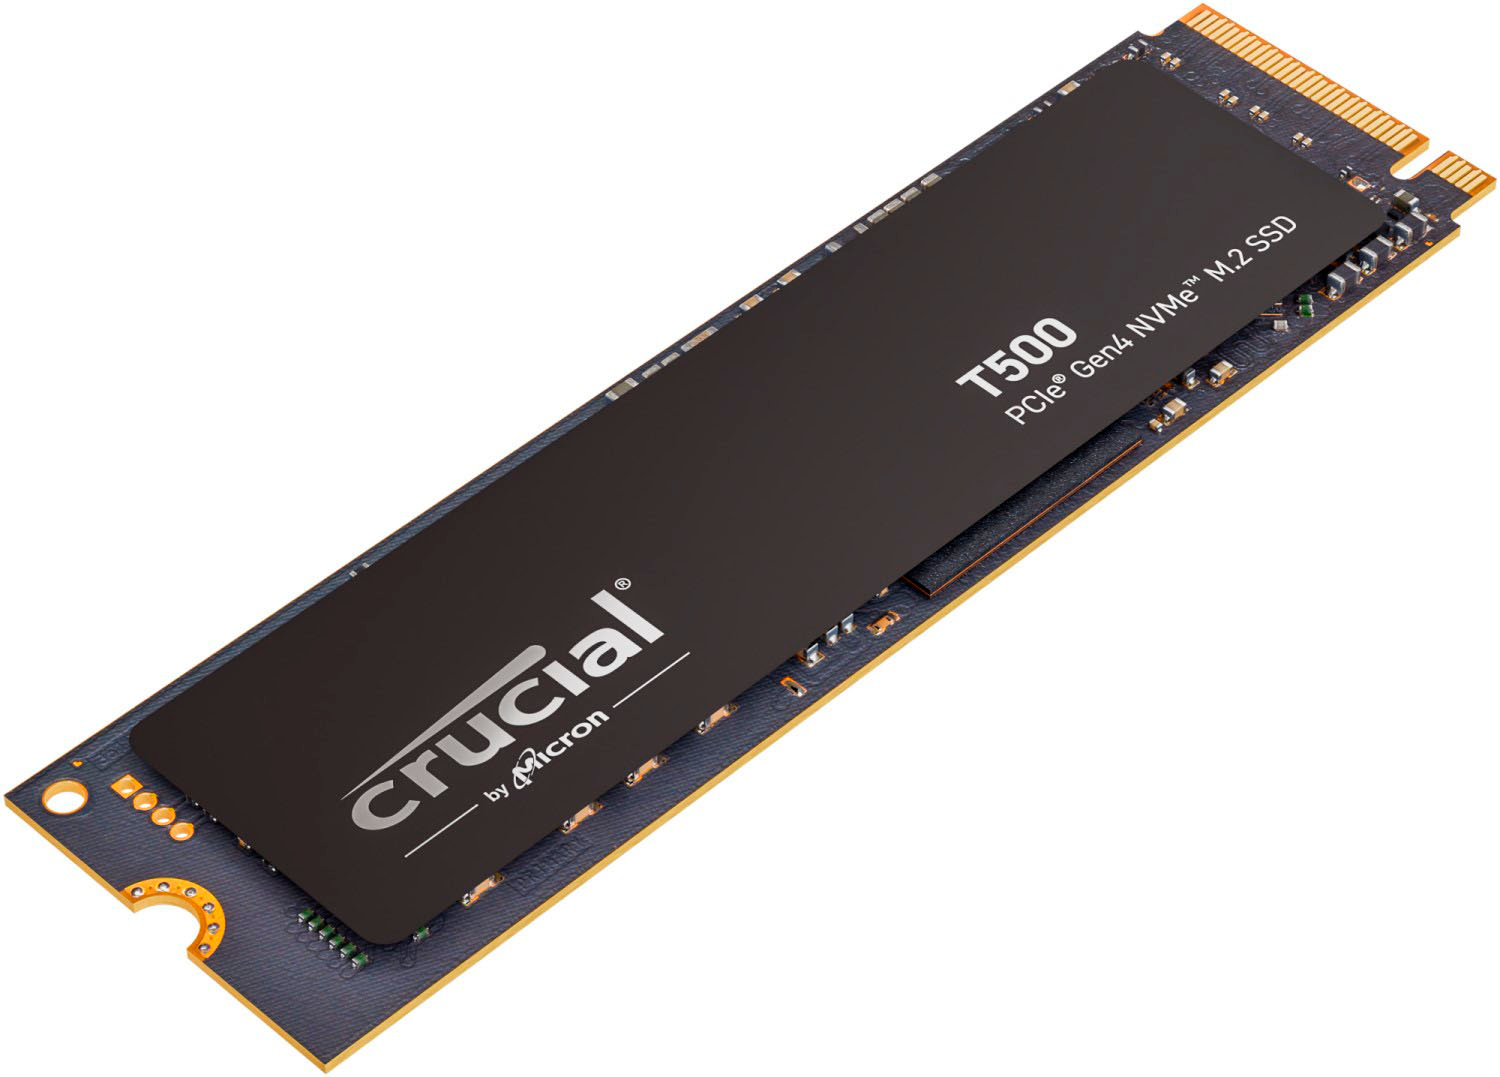 Crucial T500 2TB PCIe Gen4 NVMe M.2 SSD with heatsink, CT2000T500SSD5